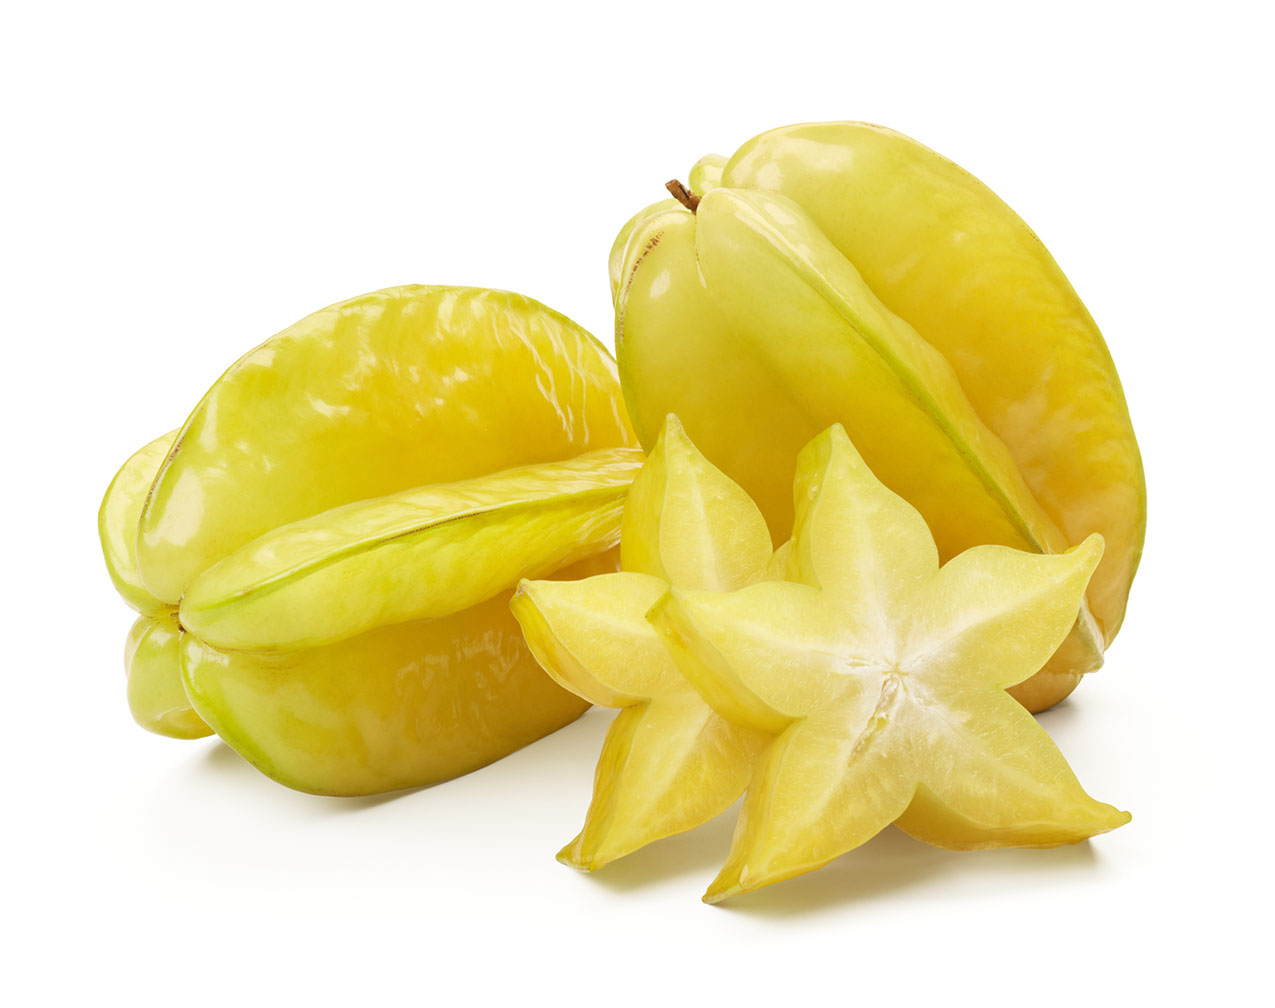 28 excellent health benefits of starfruit (#1 top antioxidant